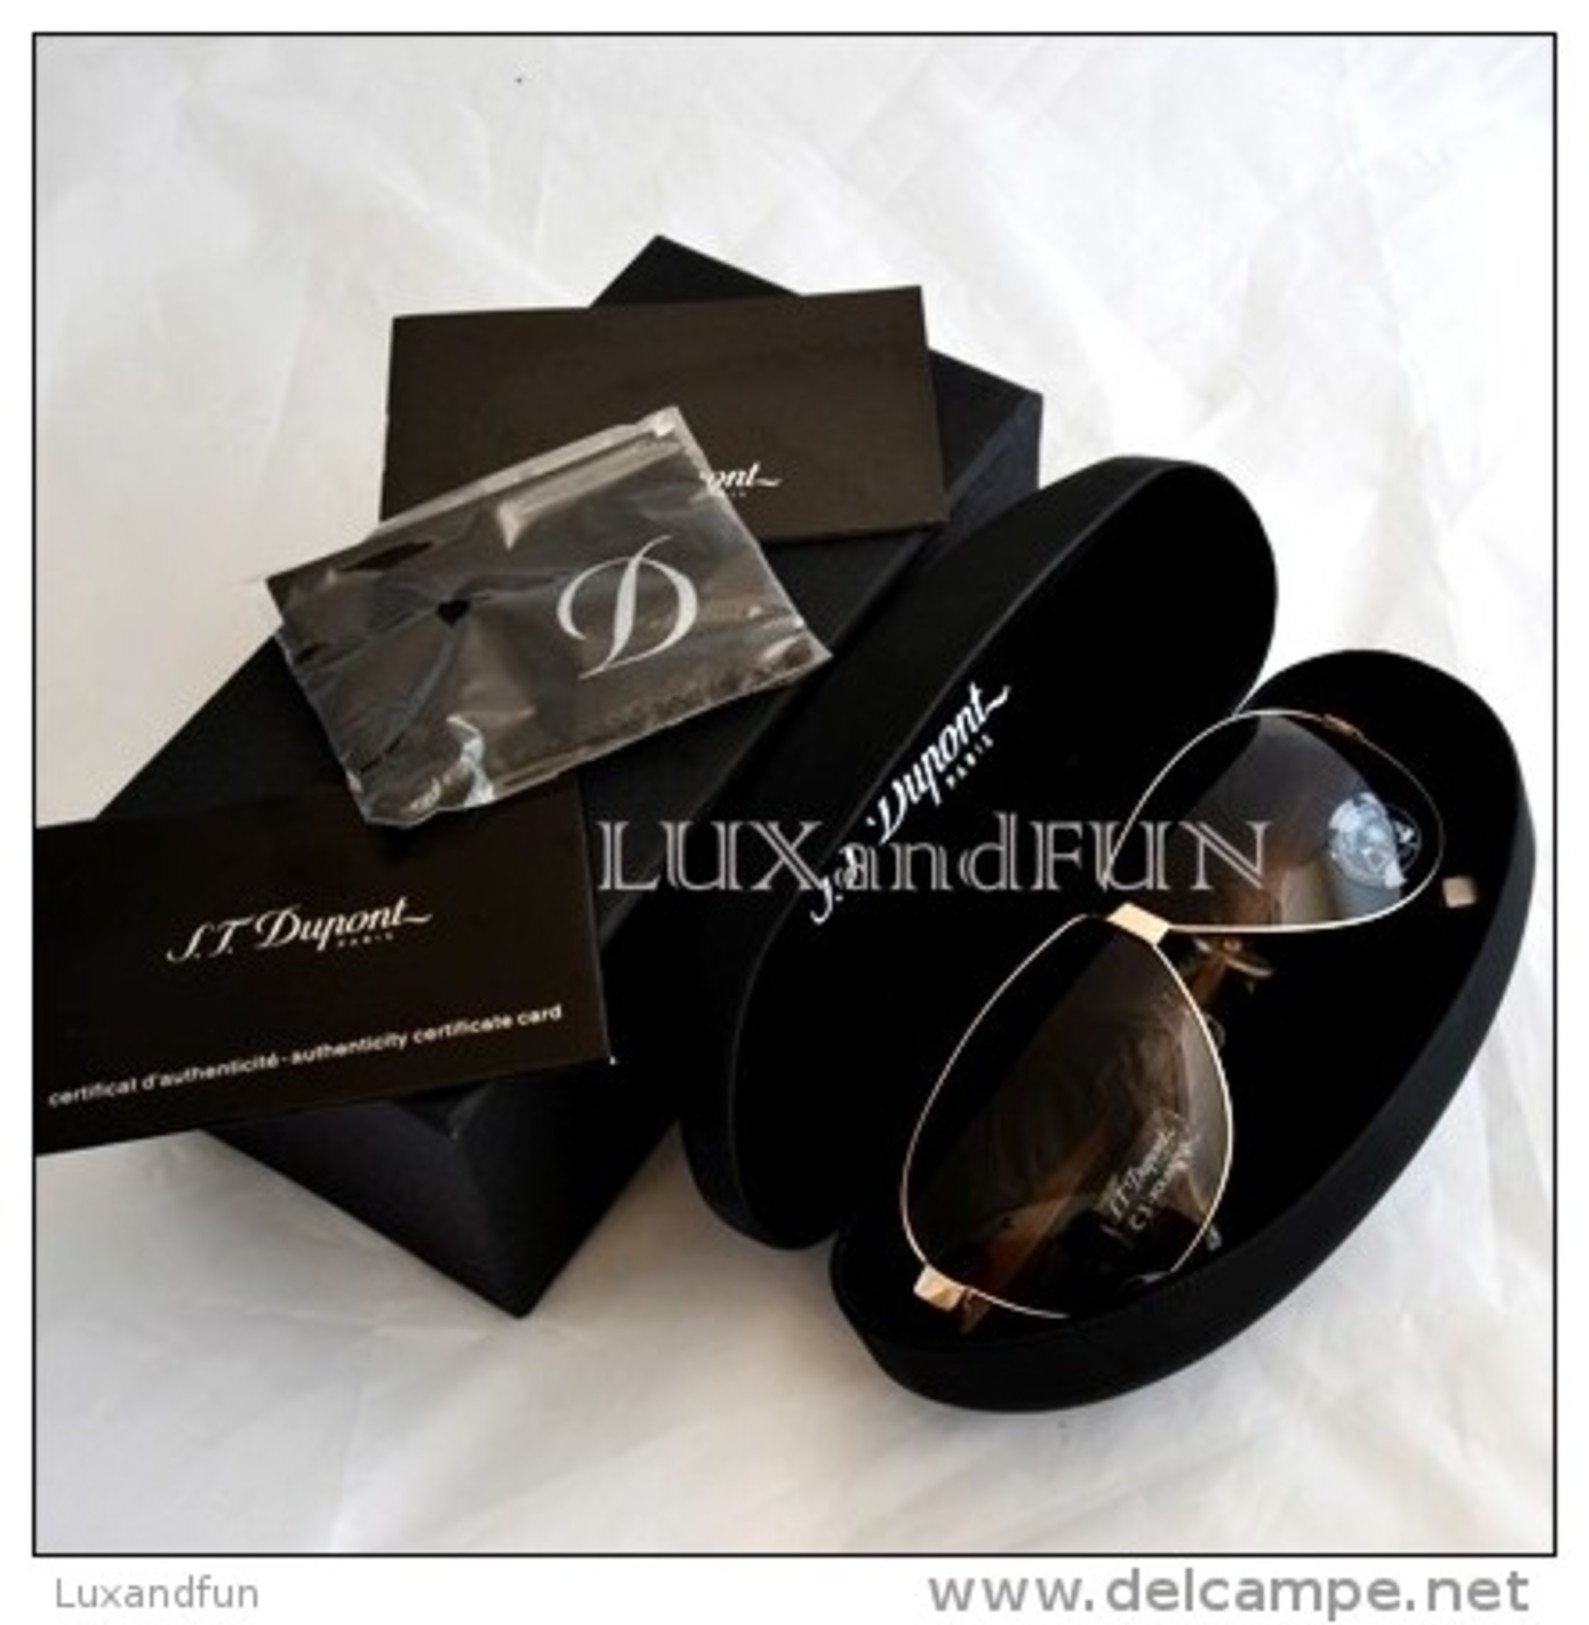 S.T. Dupont Occhiali da sole Titanio e Lacca - ST Dupont Sunglasses Titanium and Lacquer - Never used